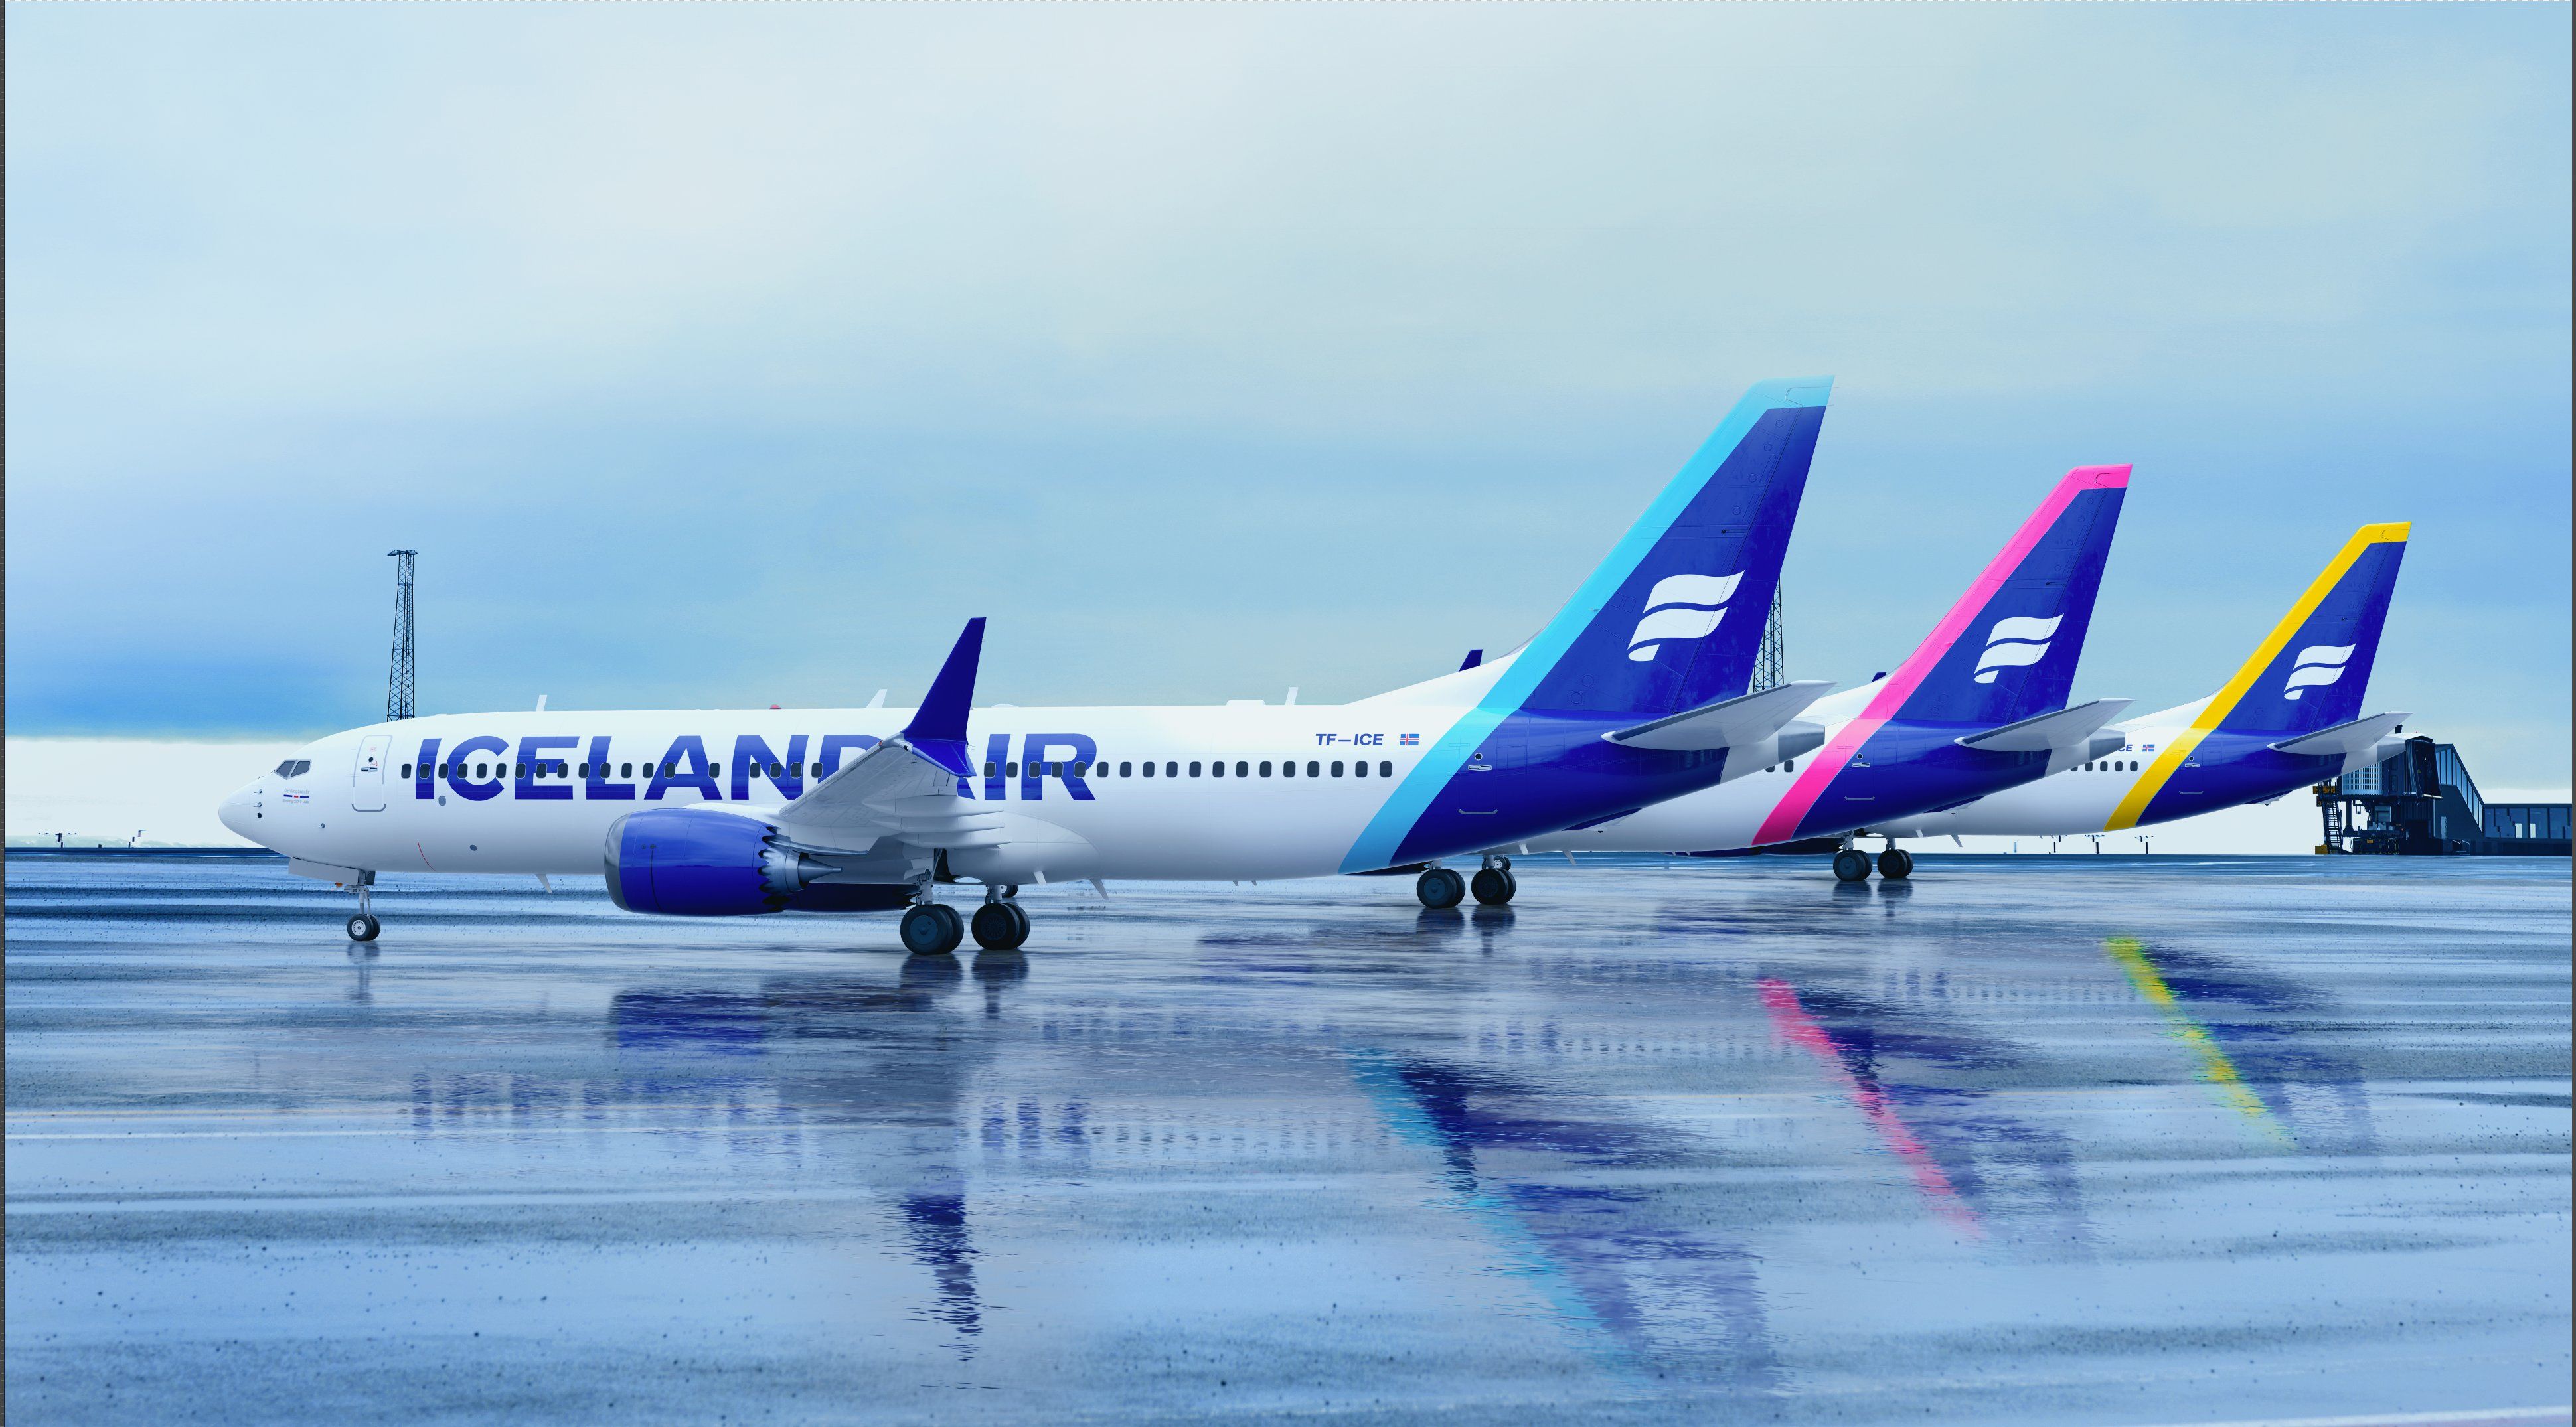 Icelandair fleet